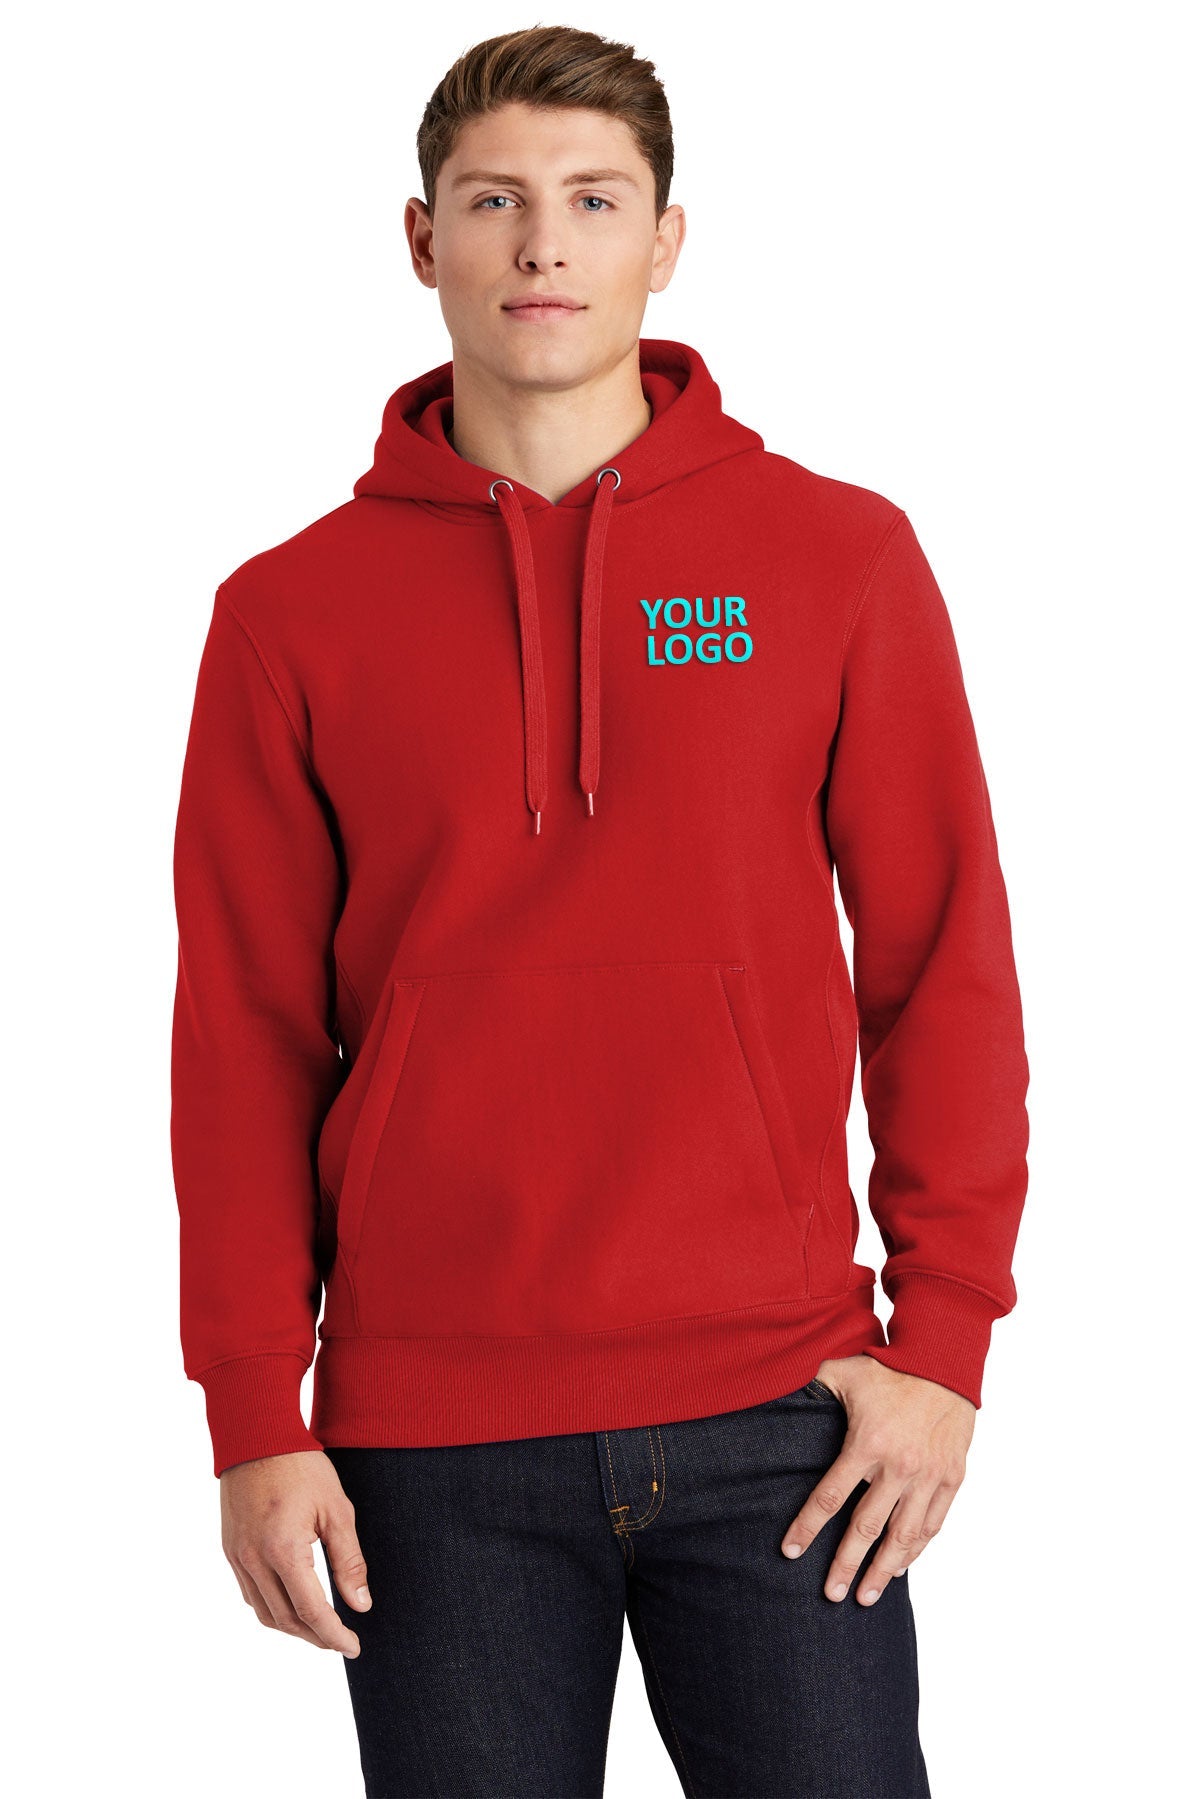 Sport-Tek Red F281 business sweatshirts with logo